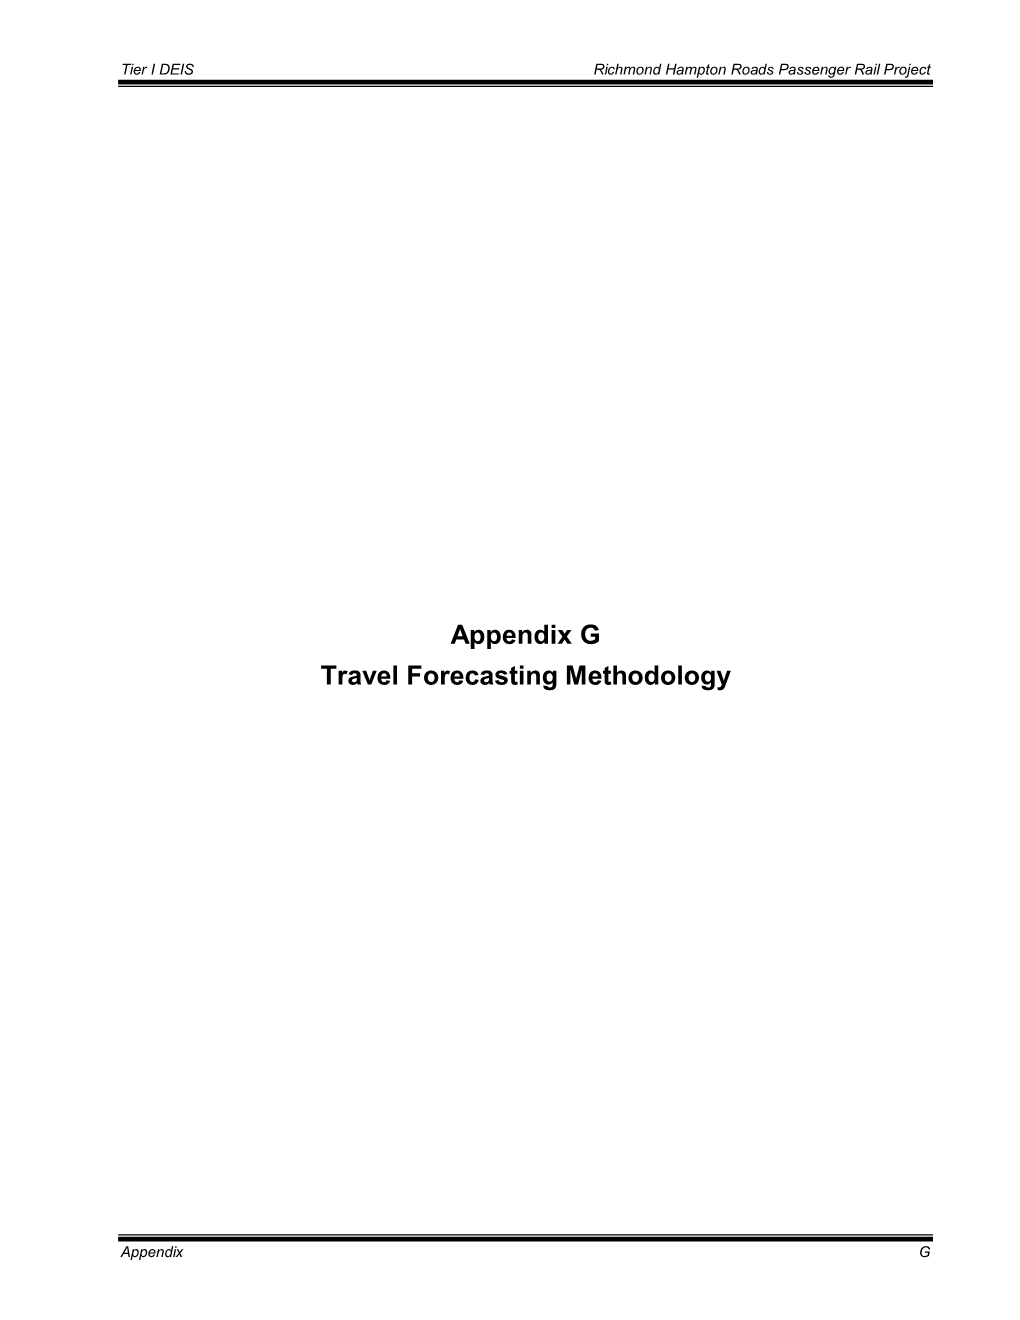 Appendix G Travel Forecasting Methodology